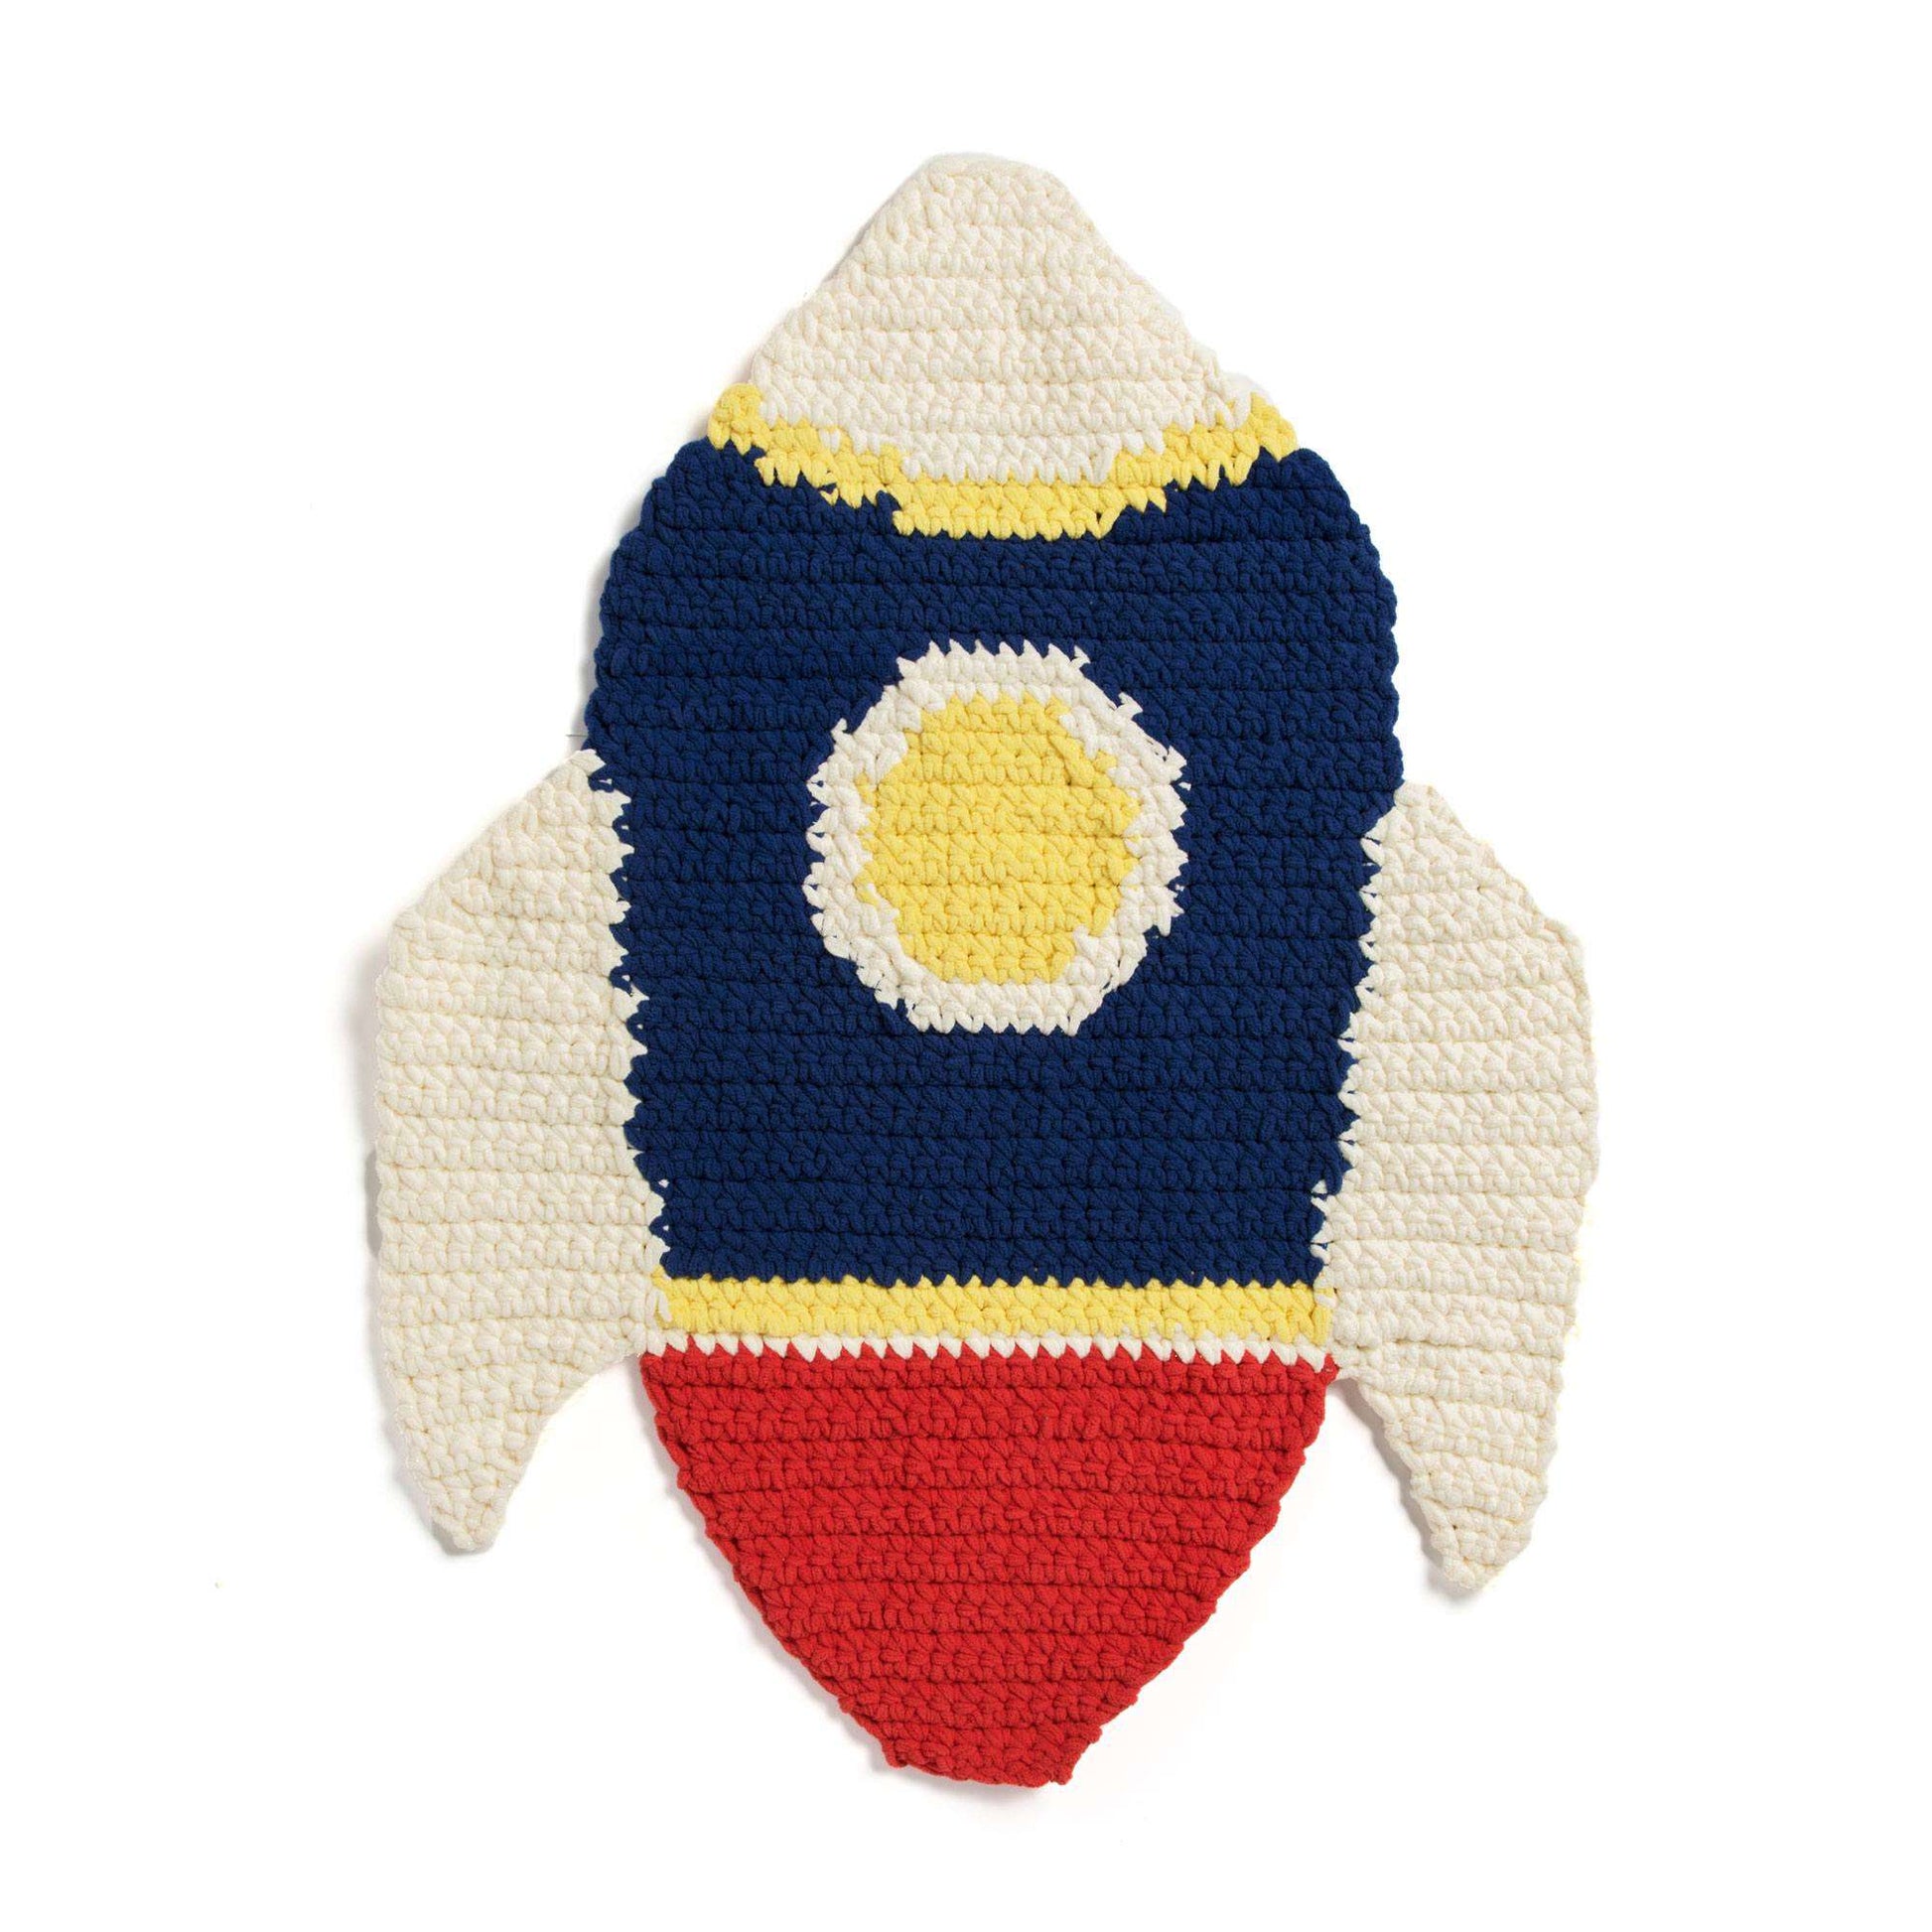 Bernat Crochet Rocket Rug Crochet Rug made in Bernat Baby Blanket Sparkle yarn